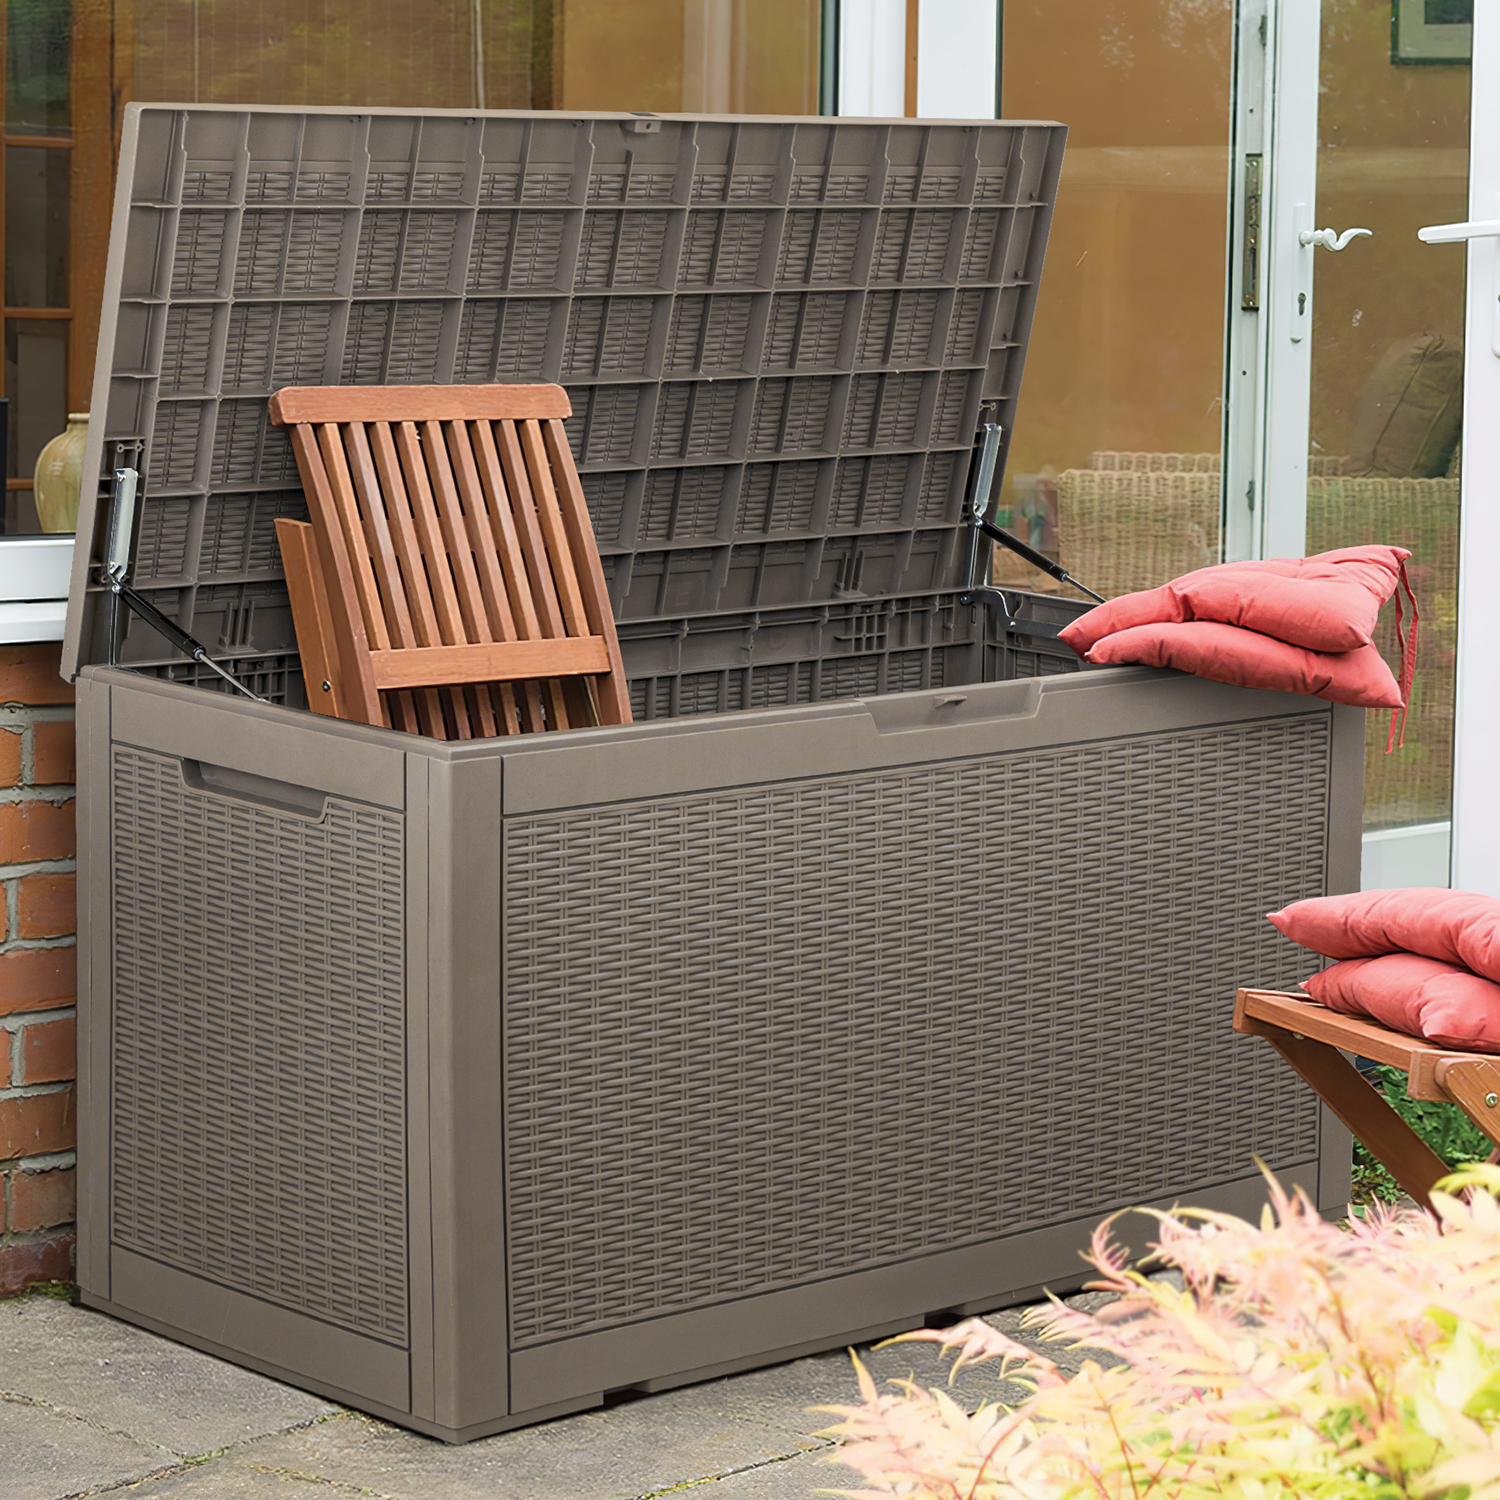 Devoko 100 Gallon Outdoor Patio Box Deck Plastic Resin Lockable Storage Box, Brown - image 2 of 7